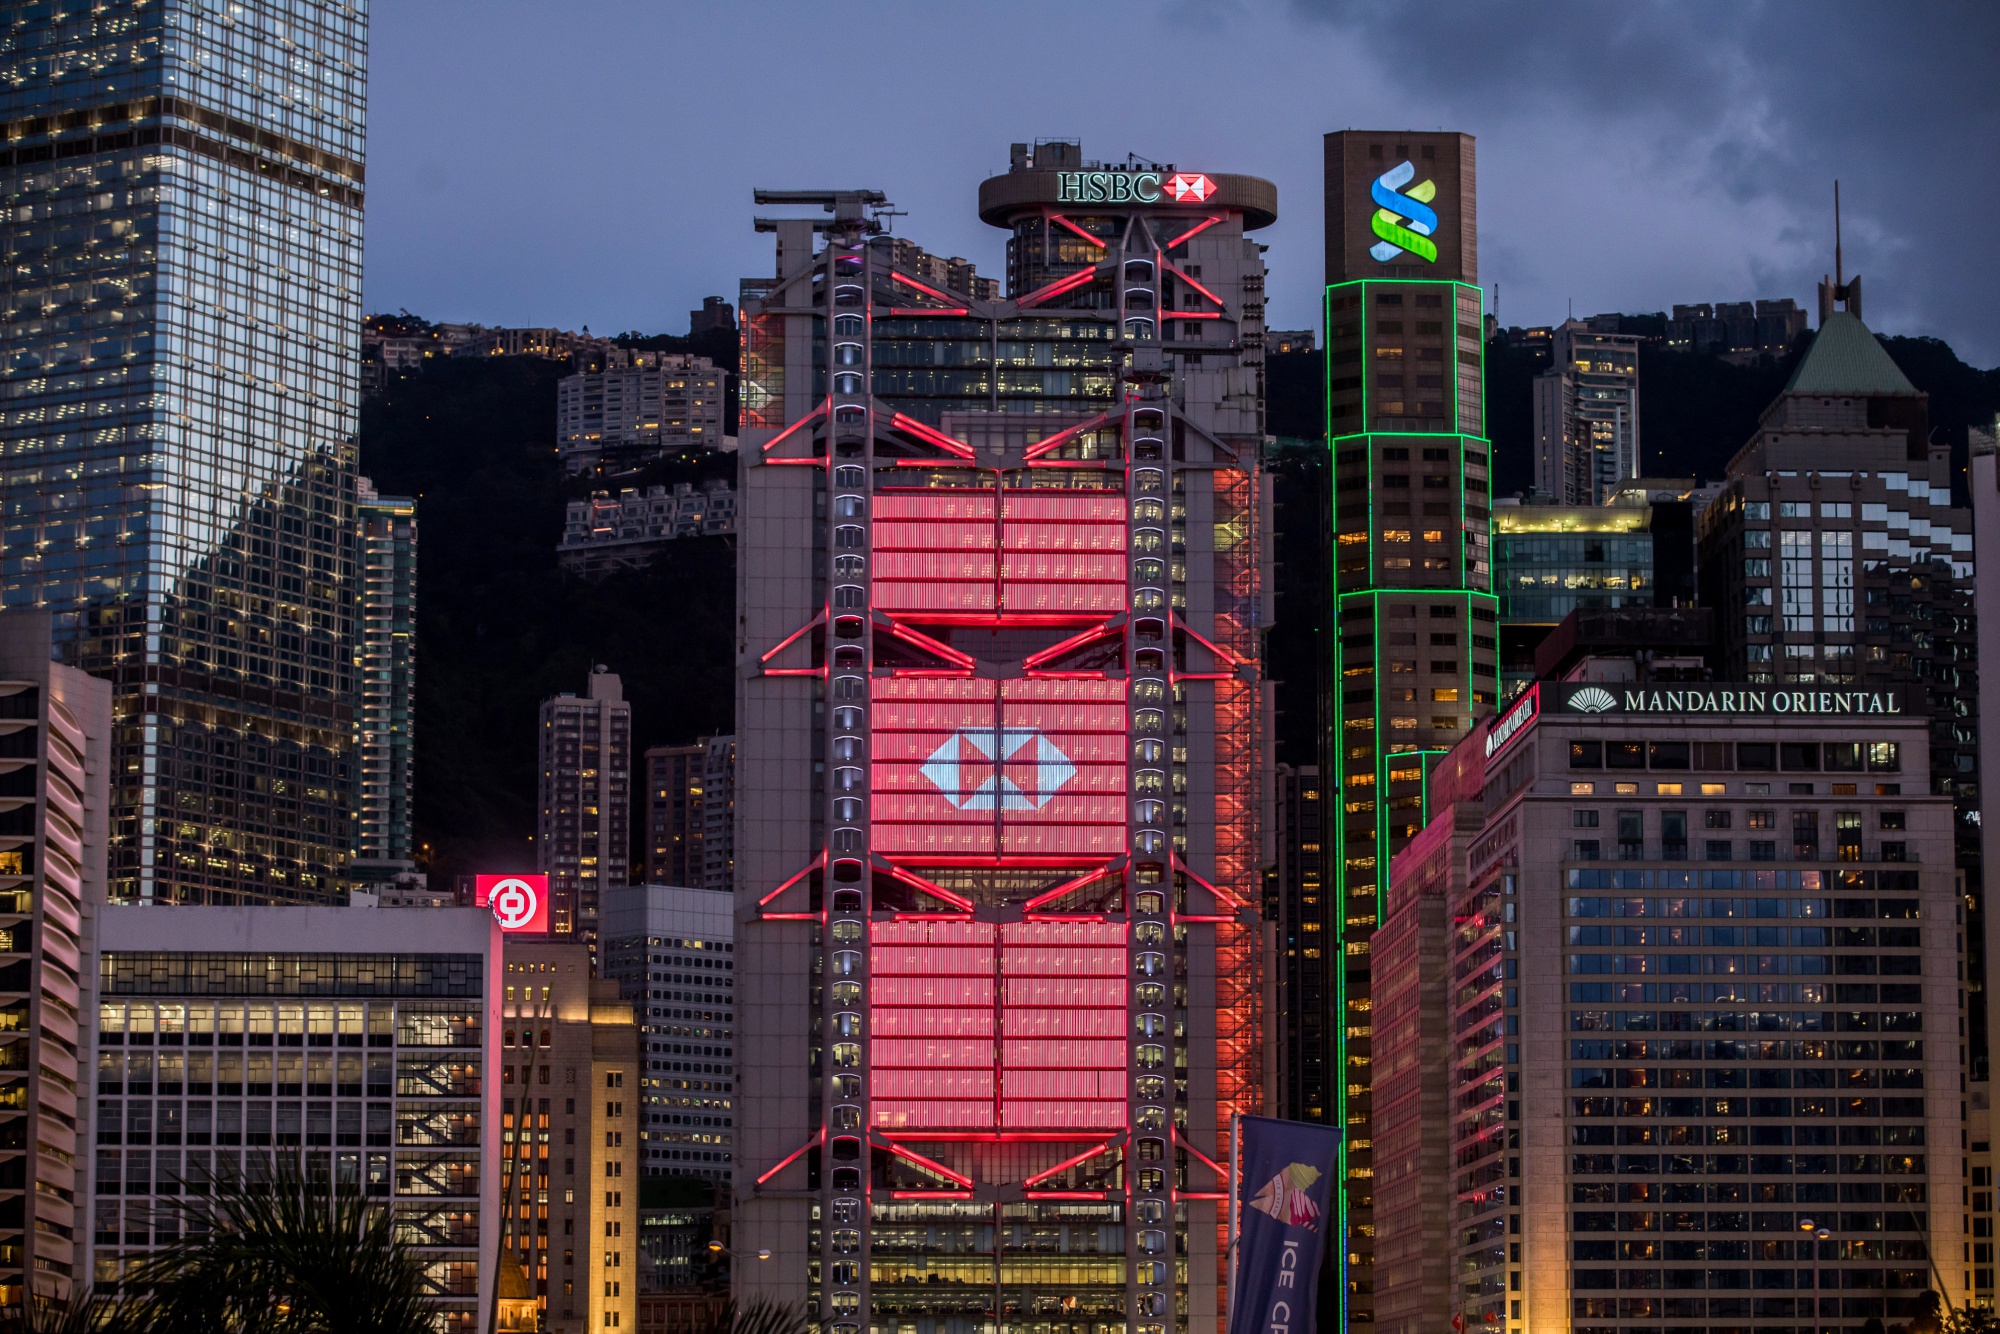 Companies hong kong. HSBC банк Гонконг. Фостер банк Гонконга и Шанхая. Здание HSBC В Гонконге.